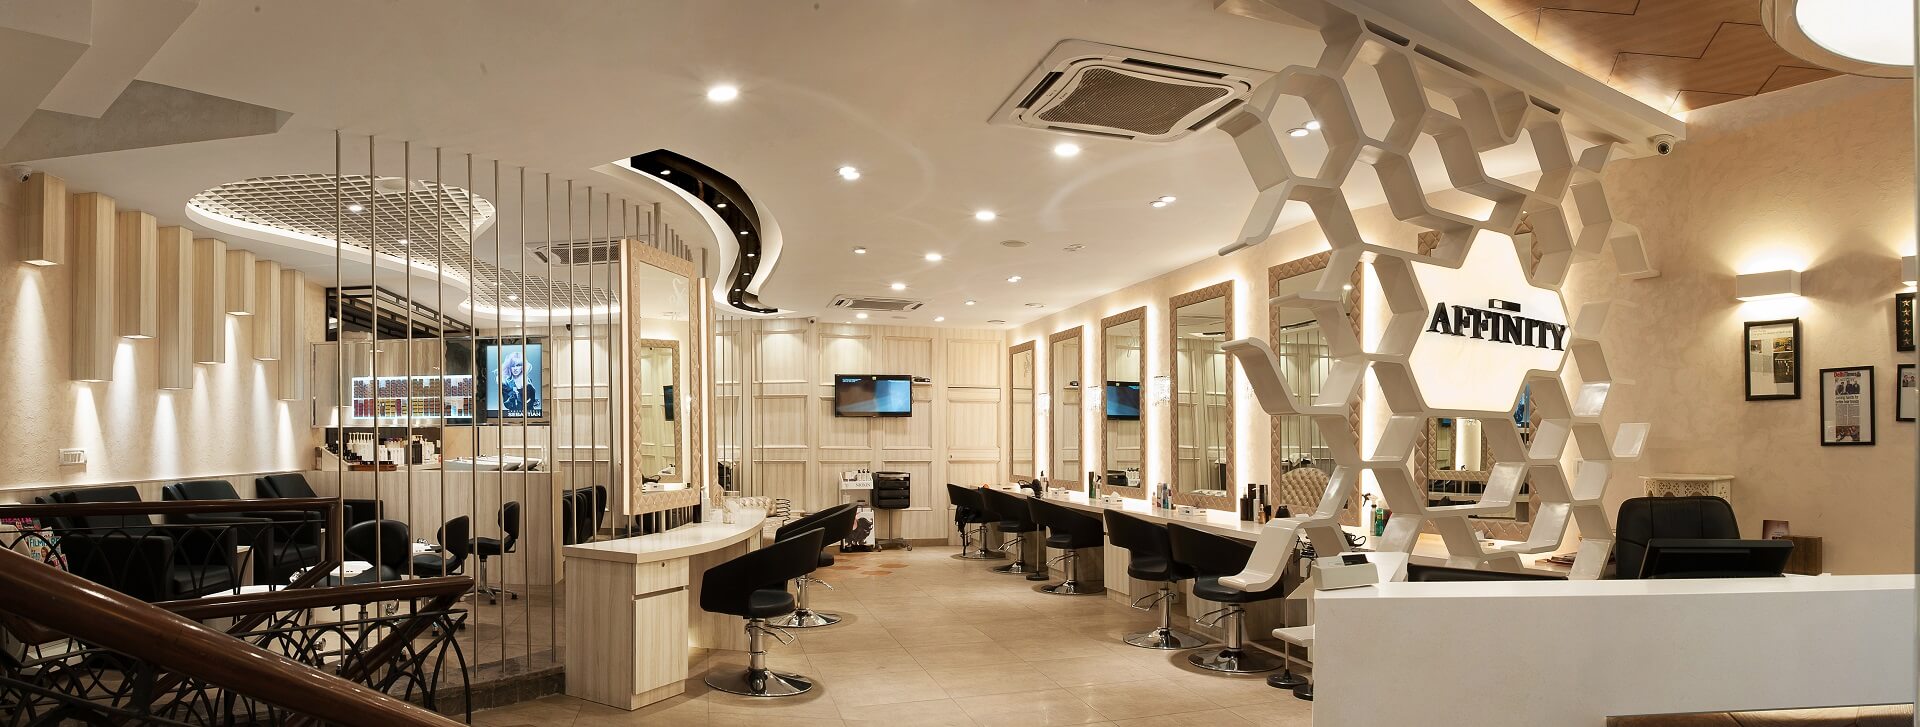 Affinity Salon interior design by Praxis